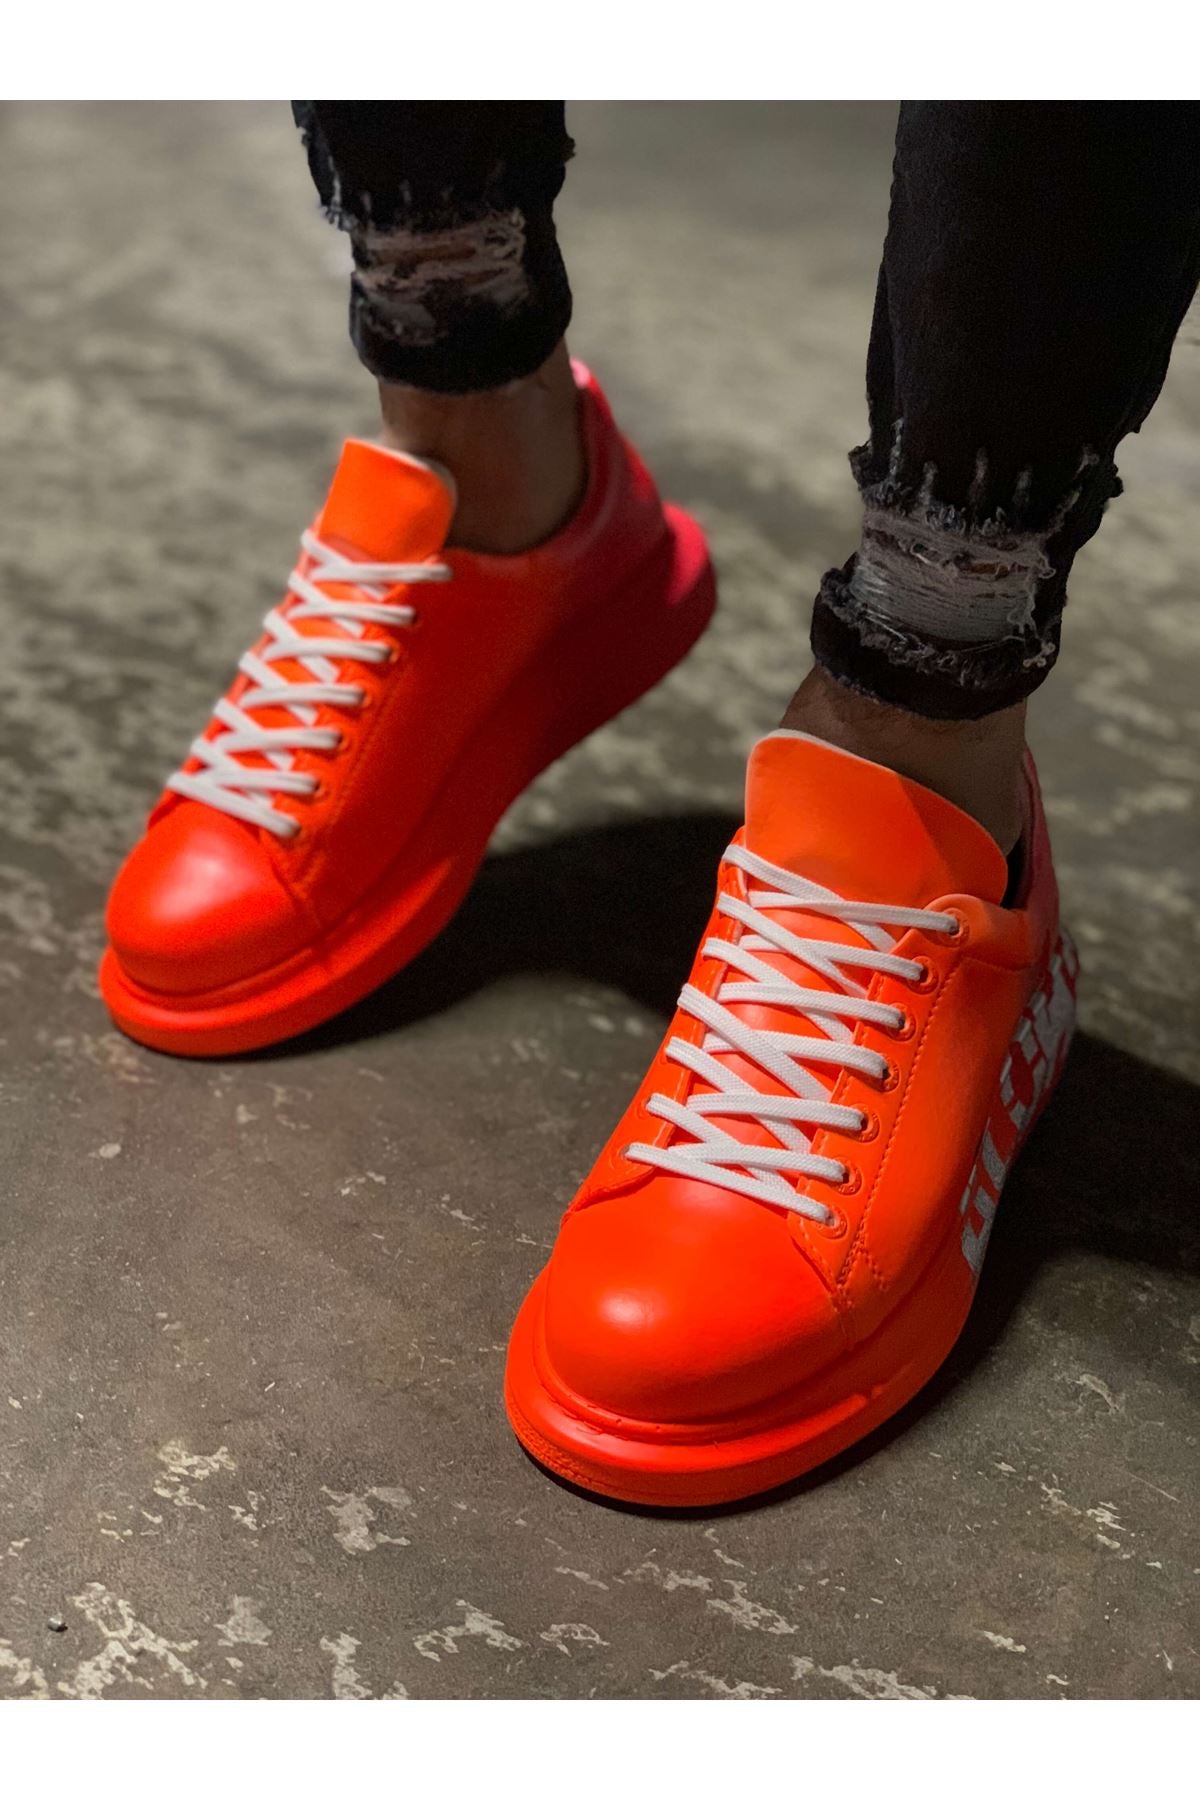 CH254 Men's Unisex Red-Orange Casual Sneaker Sports Shoes - STREET MODE ™